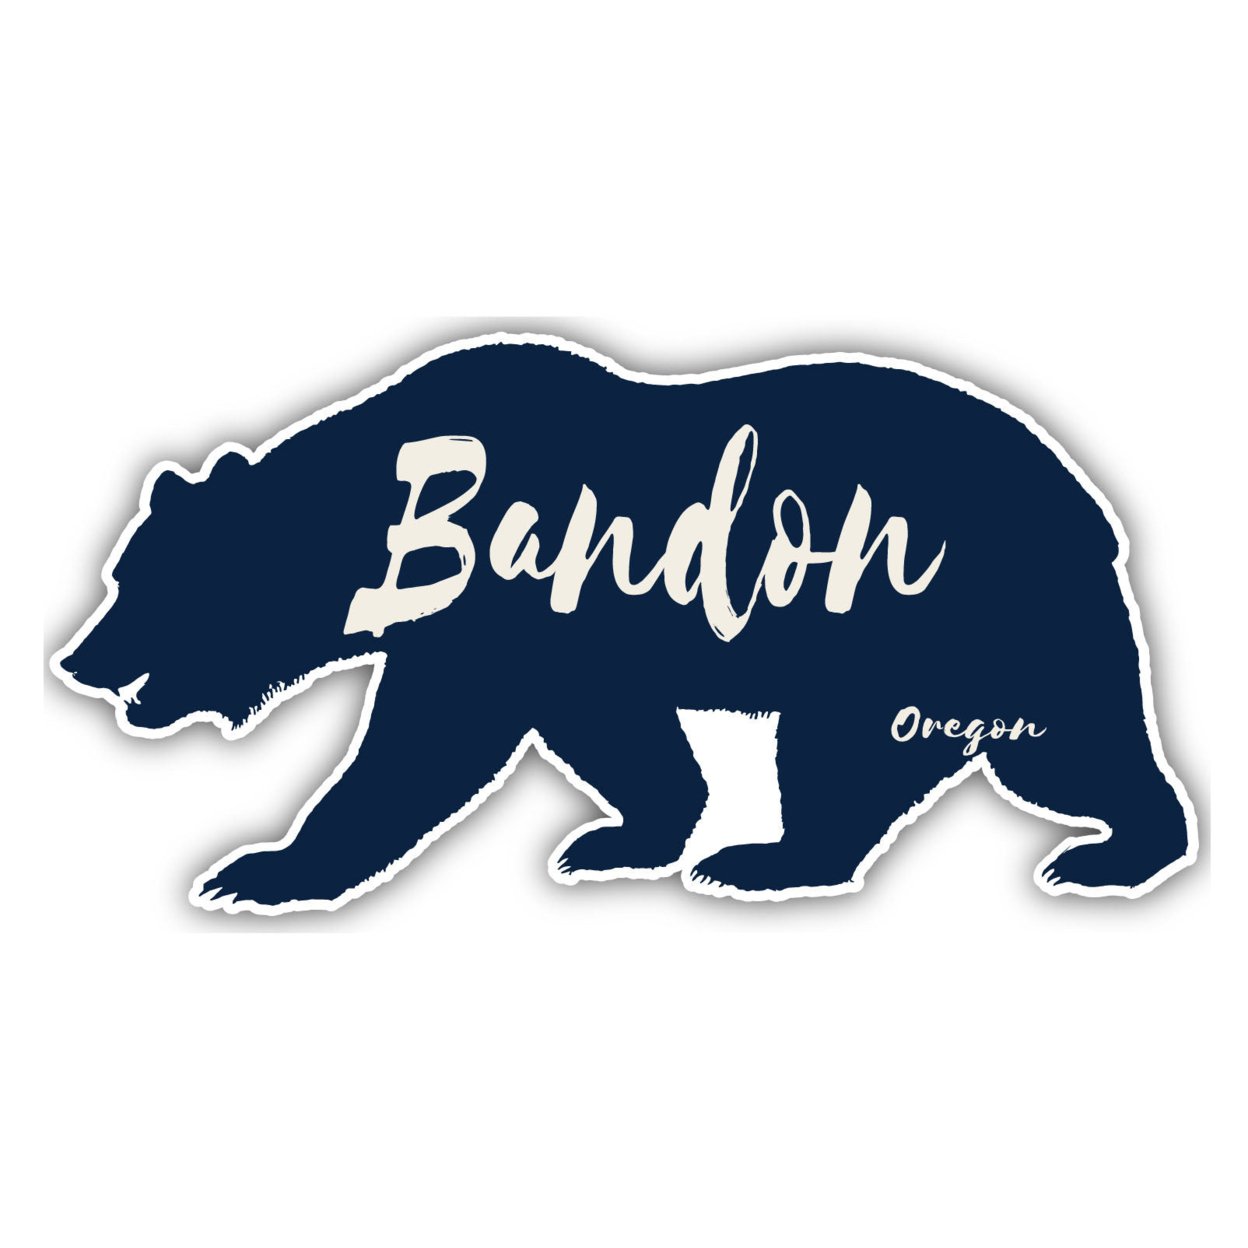 Bandon Oregon Souvenir Decorative Stickers (Choose Theme And Size) - 4-Pack, 10-Inch, Bear